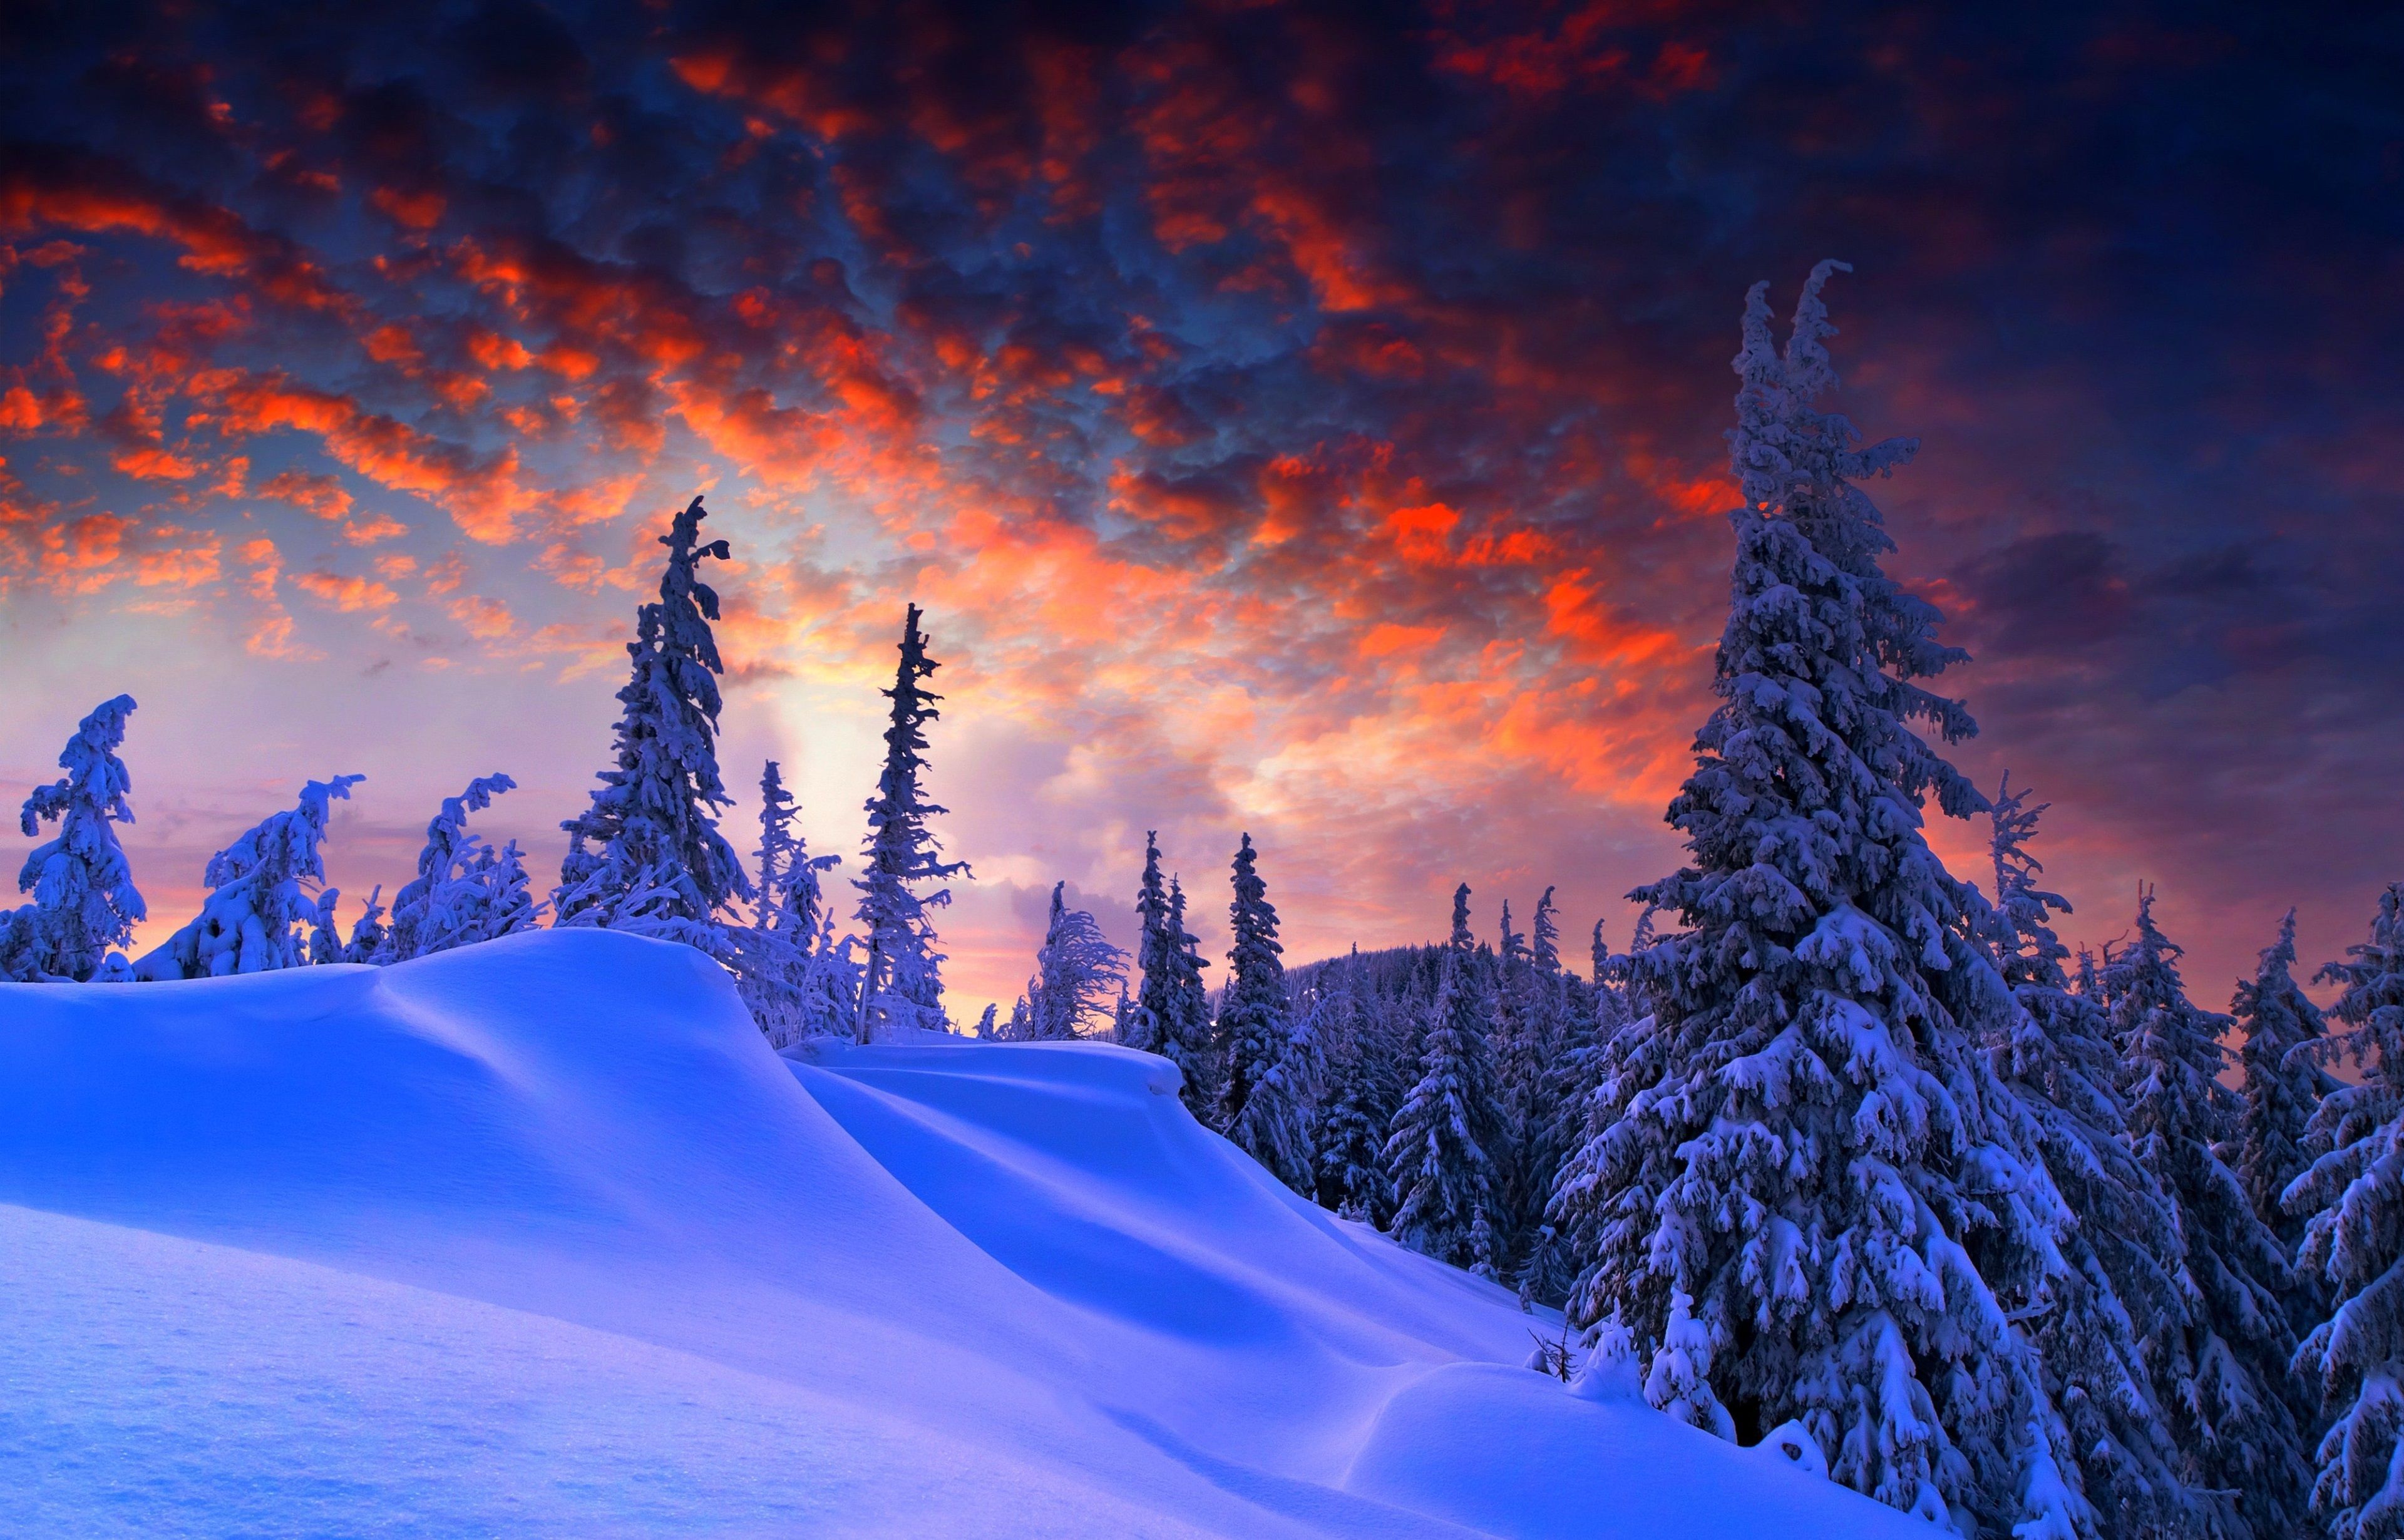 winter 4k desktop wallpaper HD. Winter wallpaper, Winter desktop background, Winter scenes